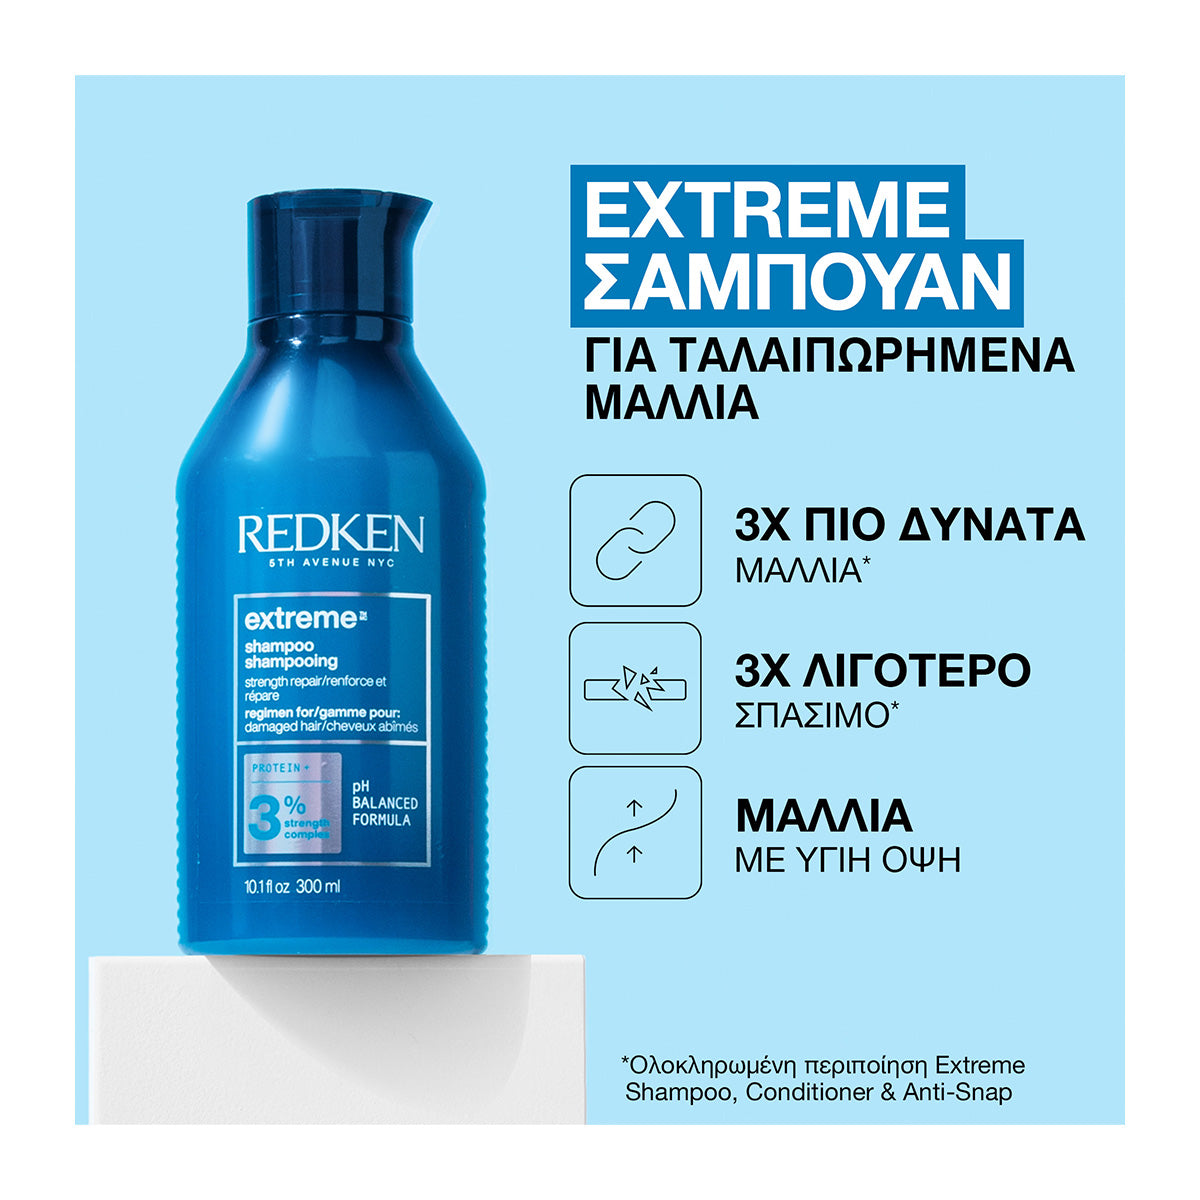 Redken Extreme Σαμπουάν Εντατικής Αναδόμησης Για Ταλαιπωρημένα Μαλλιά 500ml